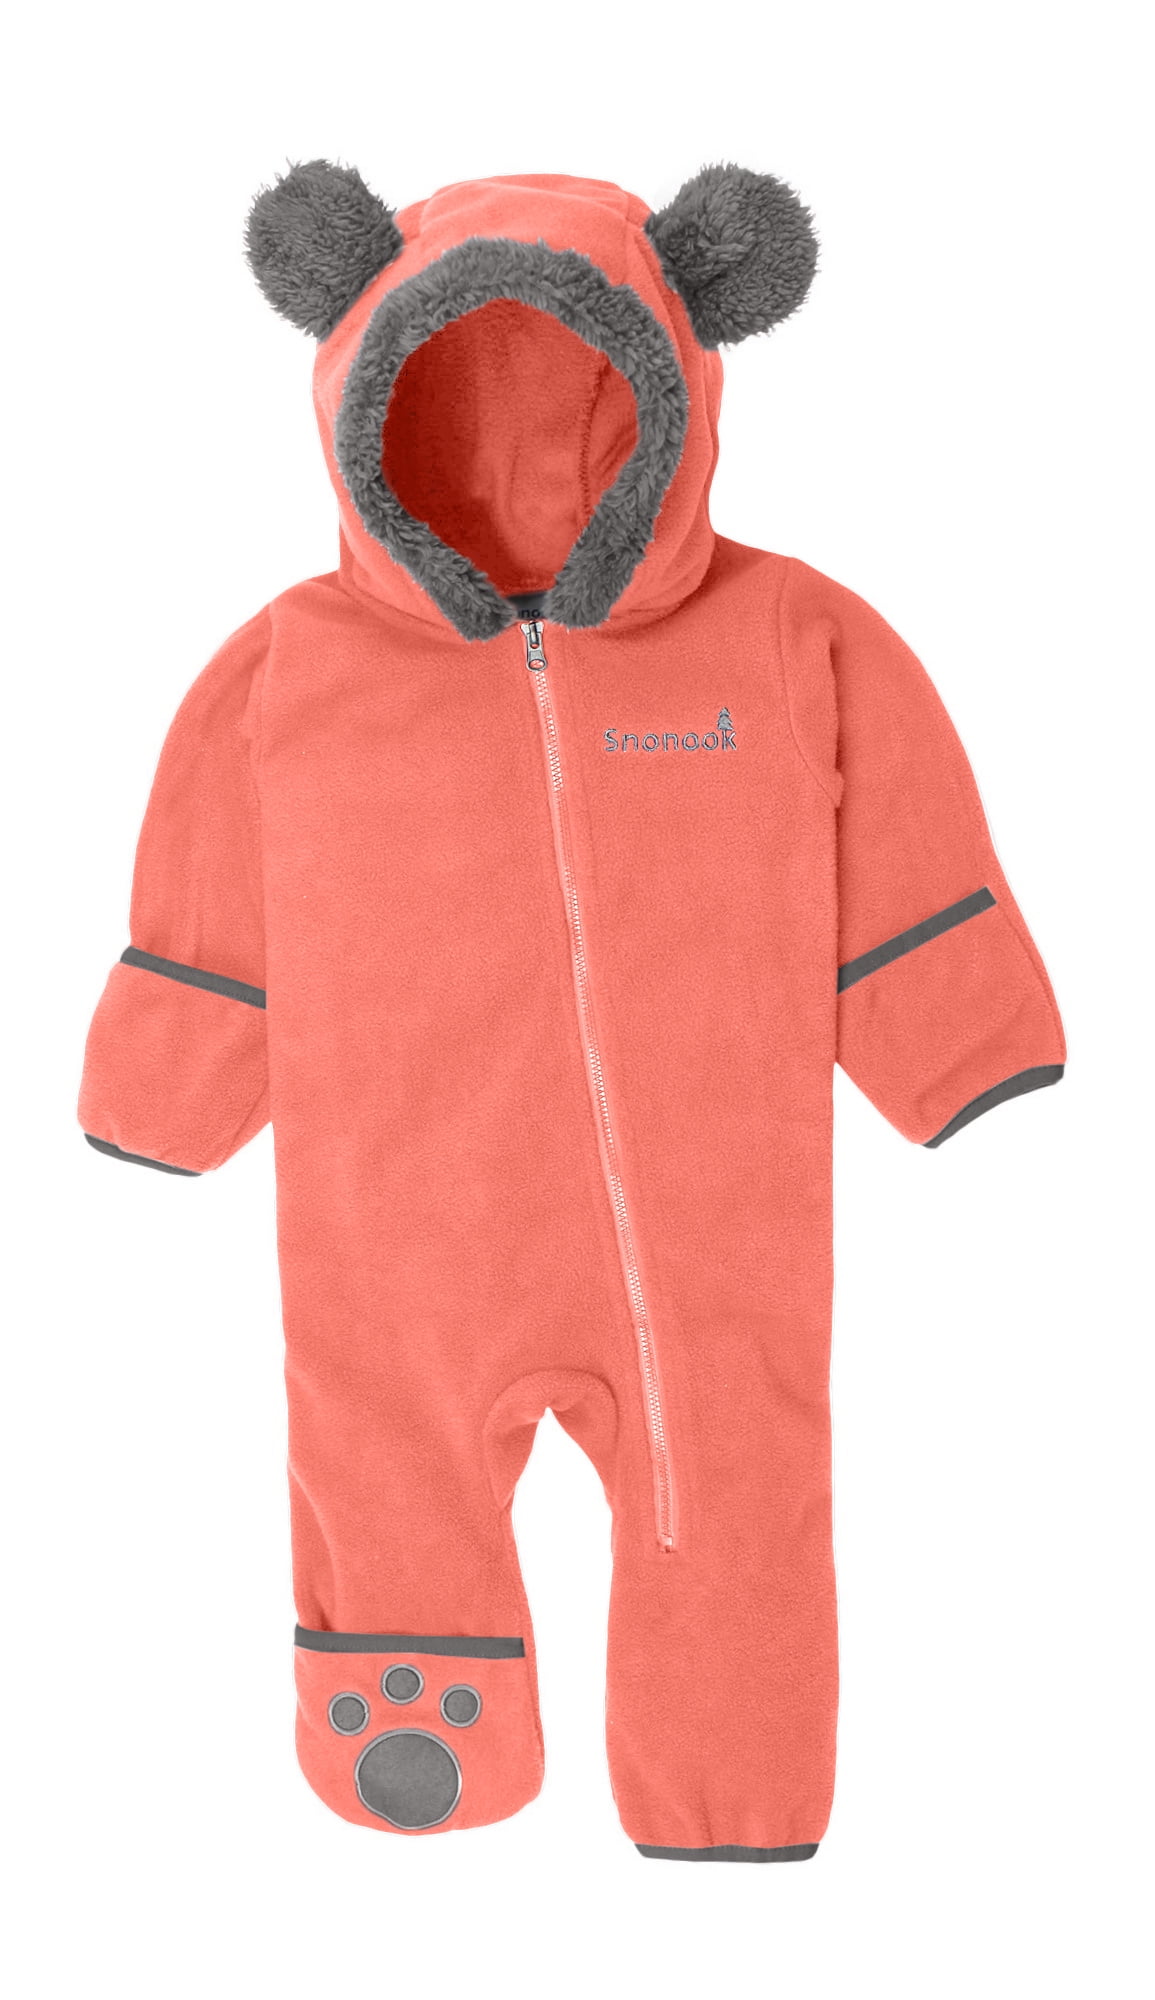 Unisex Baby Boys and Girls Teddy Coat Novelty Snuggle Hoody Sizes 0-24 Months